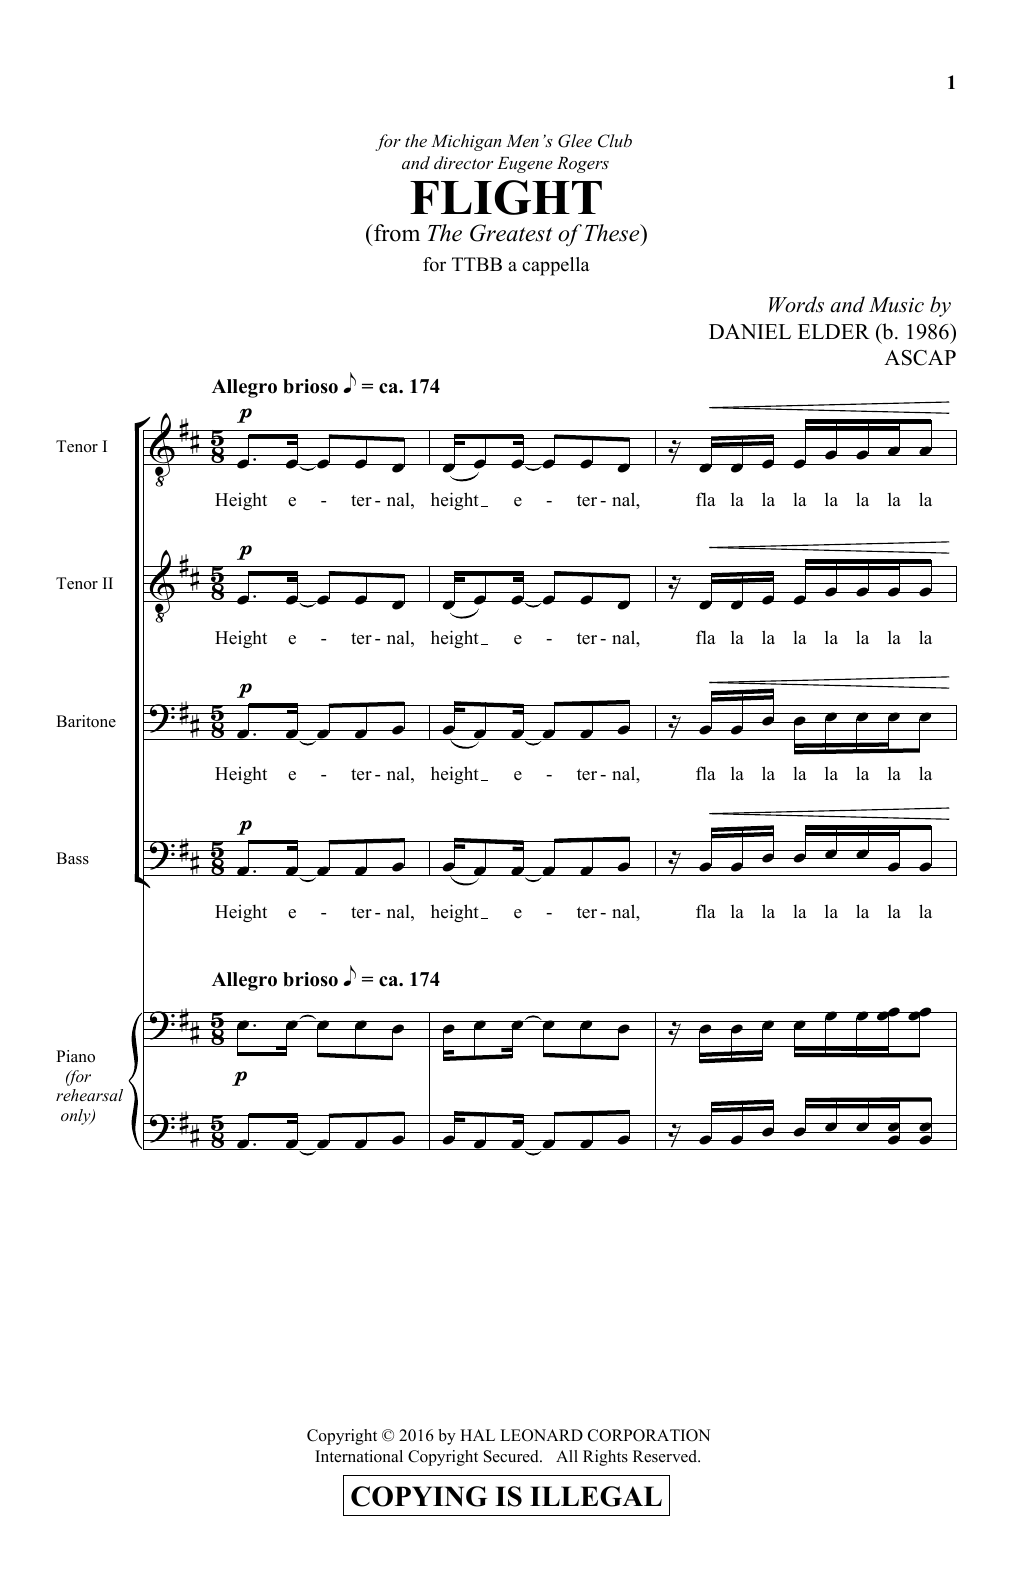 Download Daniel Elder Flight Sheet Music and learn how to play TTBB PDF digital score in minutes